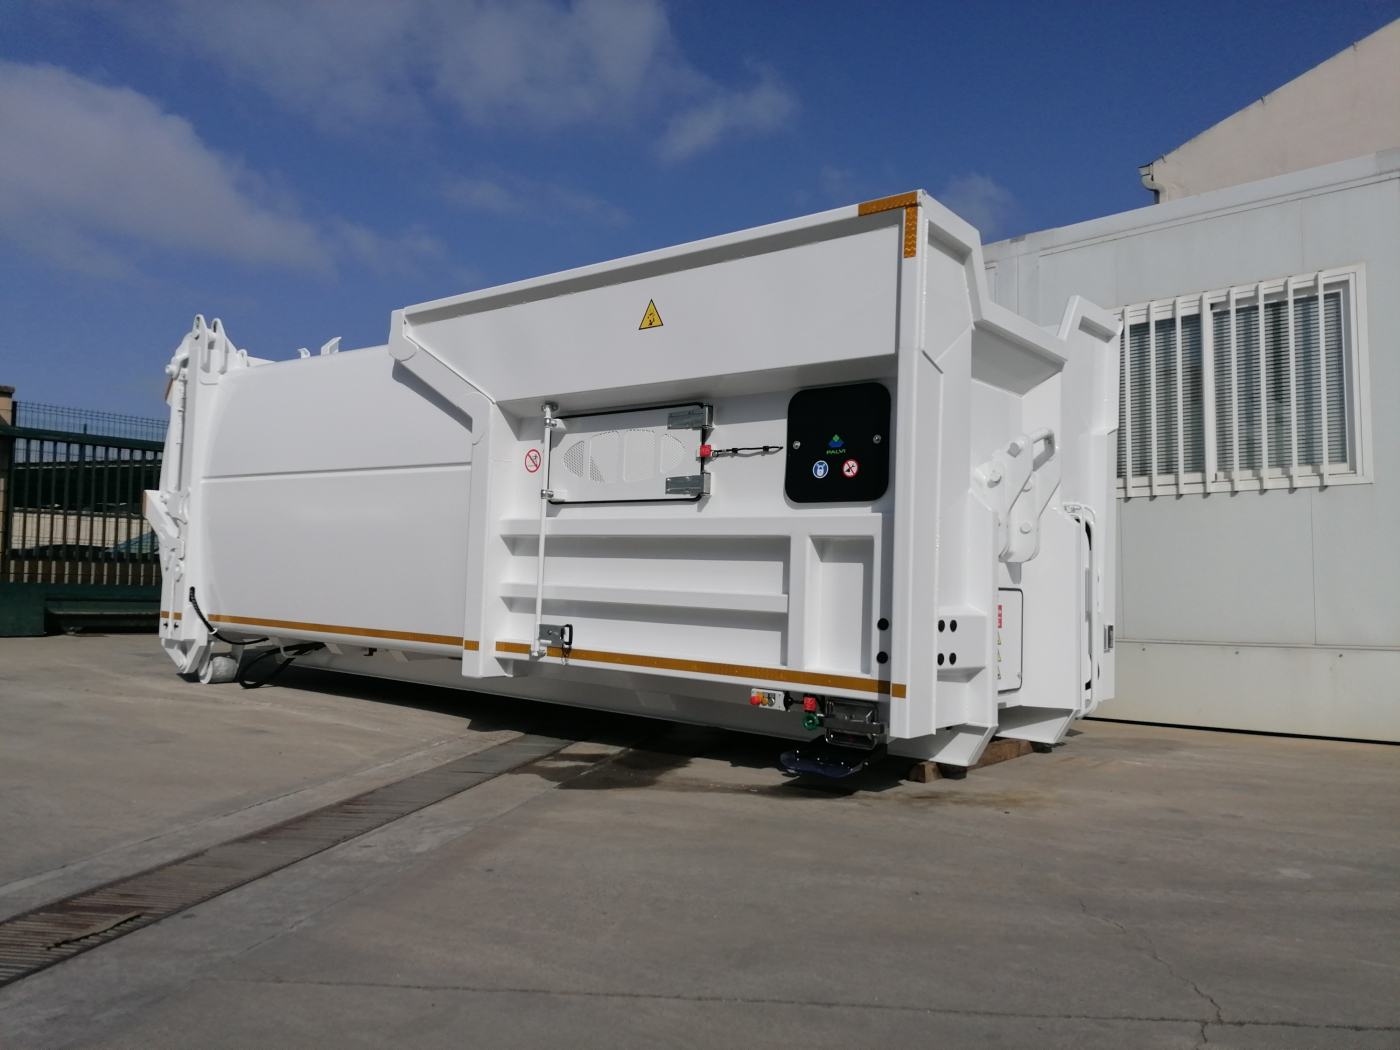 Palvi delivered three waste compactors to Castellbisbal